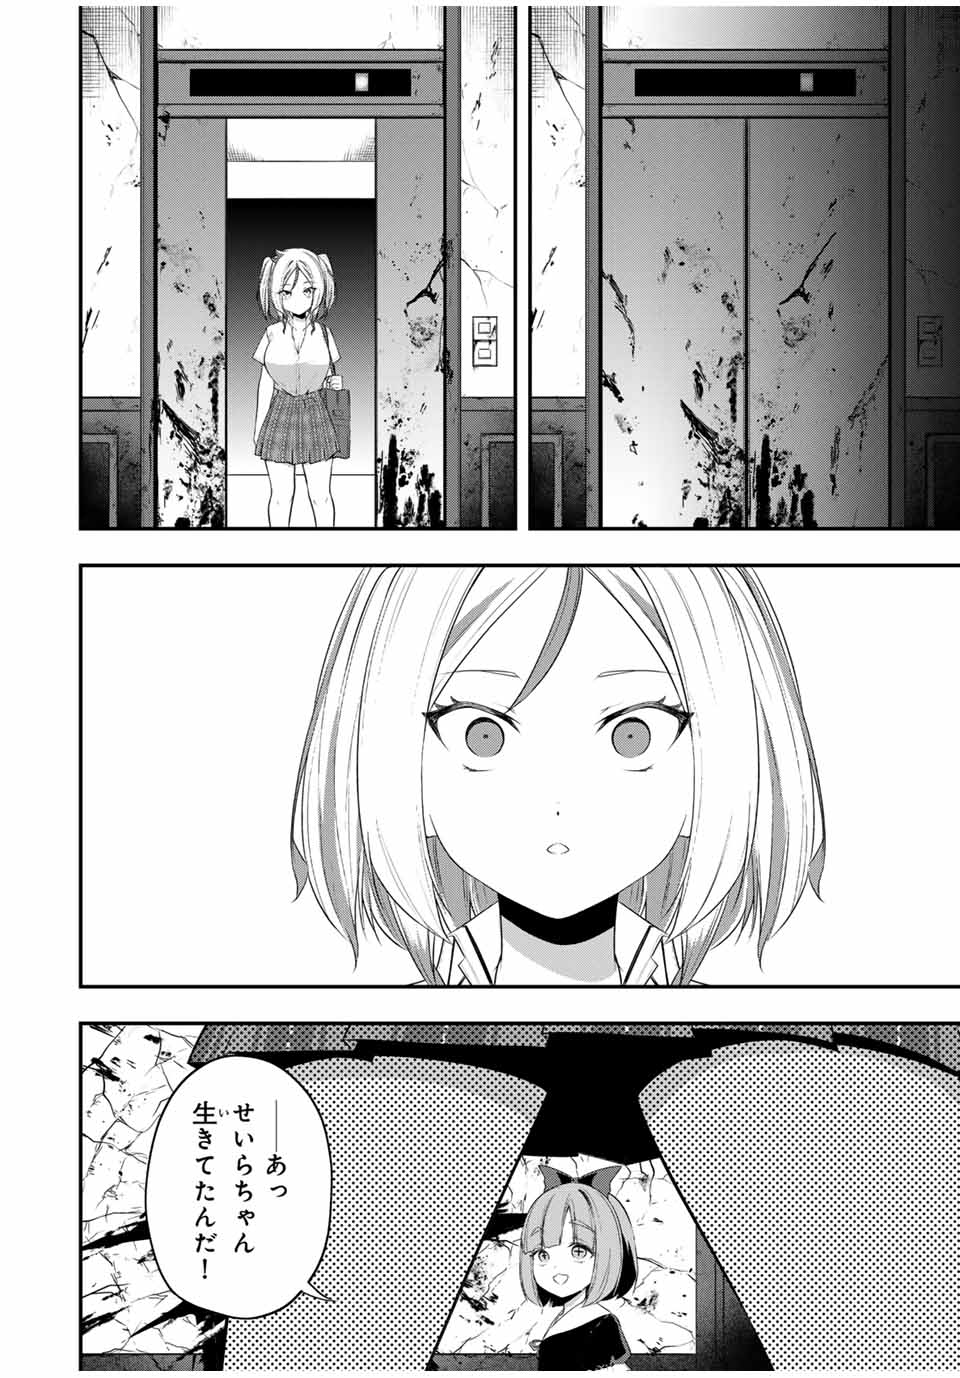 Heroine wa xx Okasegitai - Chapter 14 - Page 20